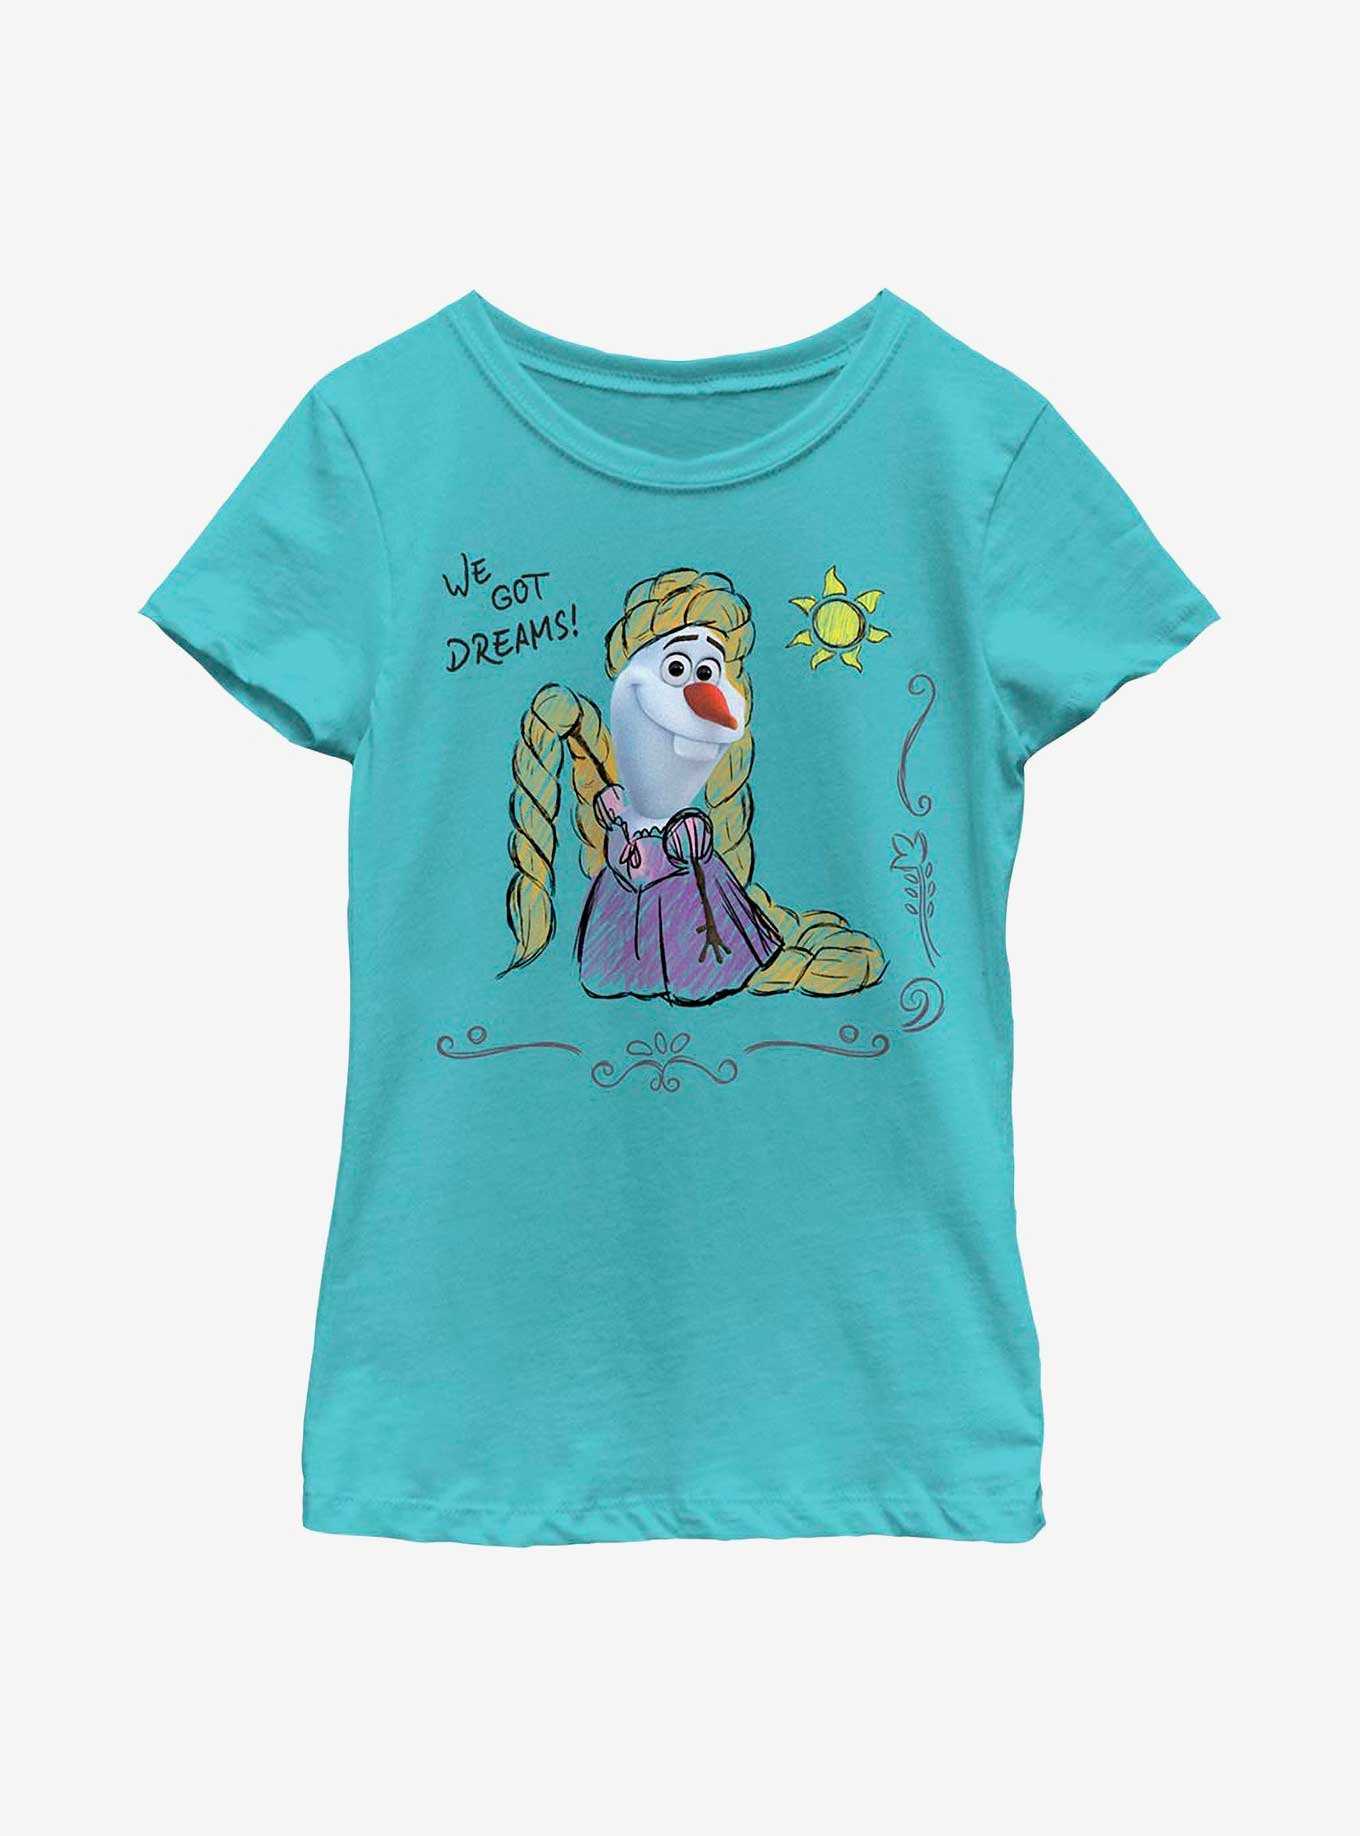 Disney Olaf Presents Rapunzel Outfit Youth Girls T-Shirt, , hi-res